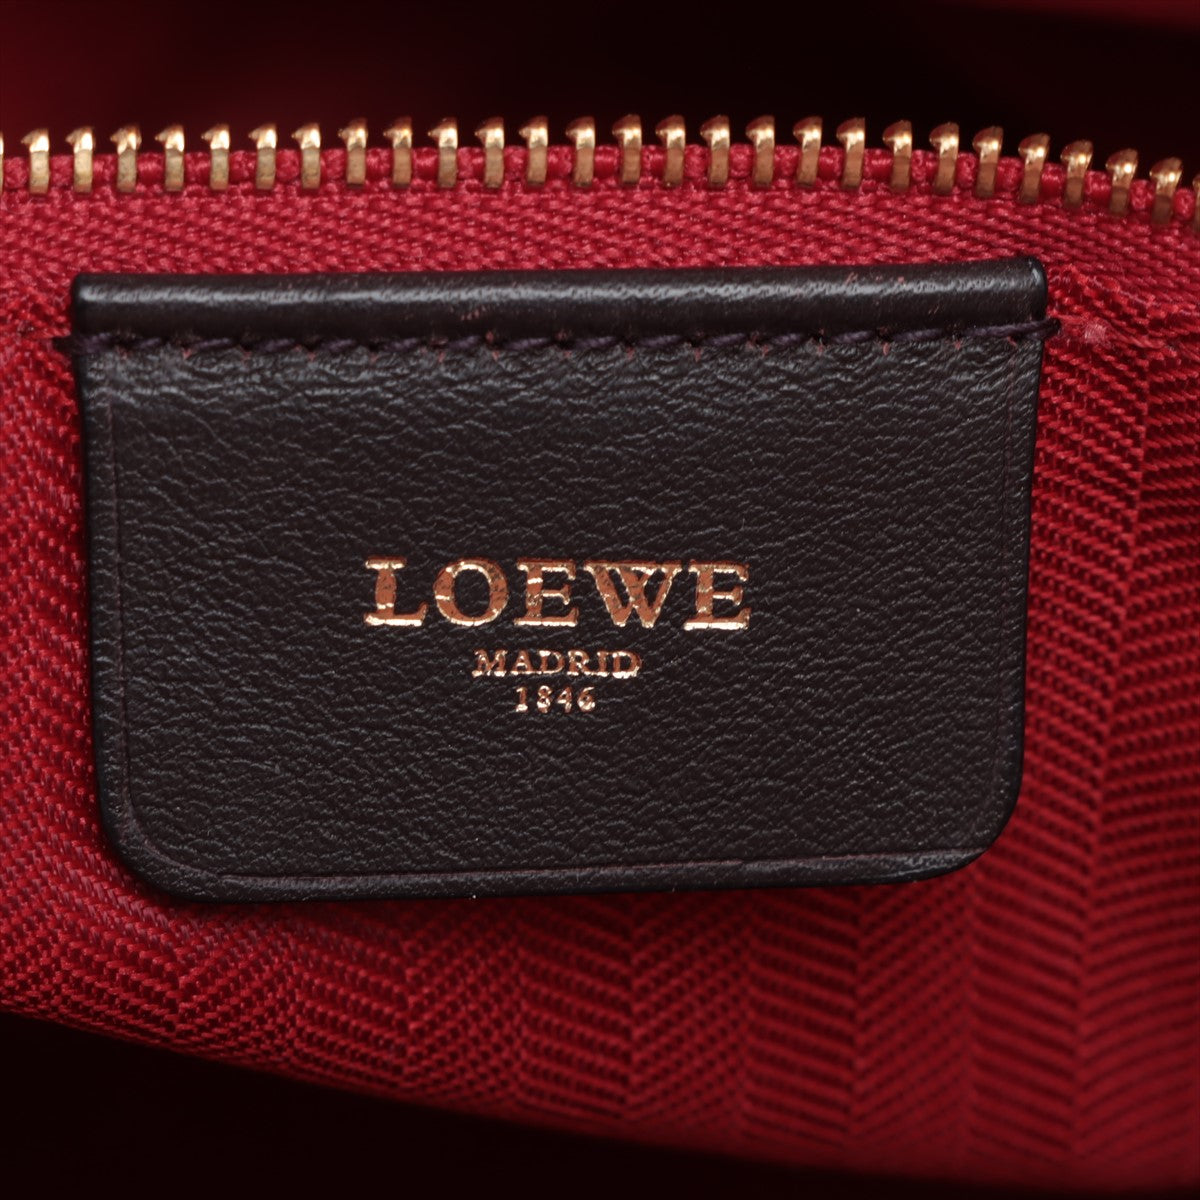 Loewe Fusta Leather Tote Bag Pink